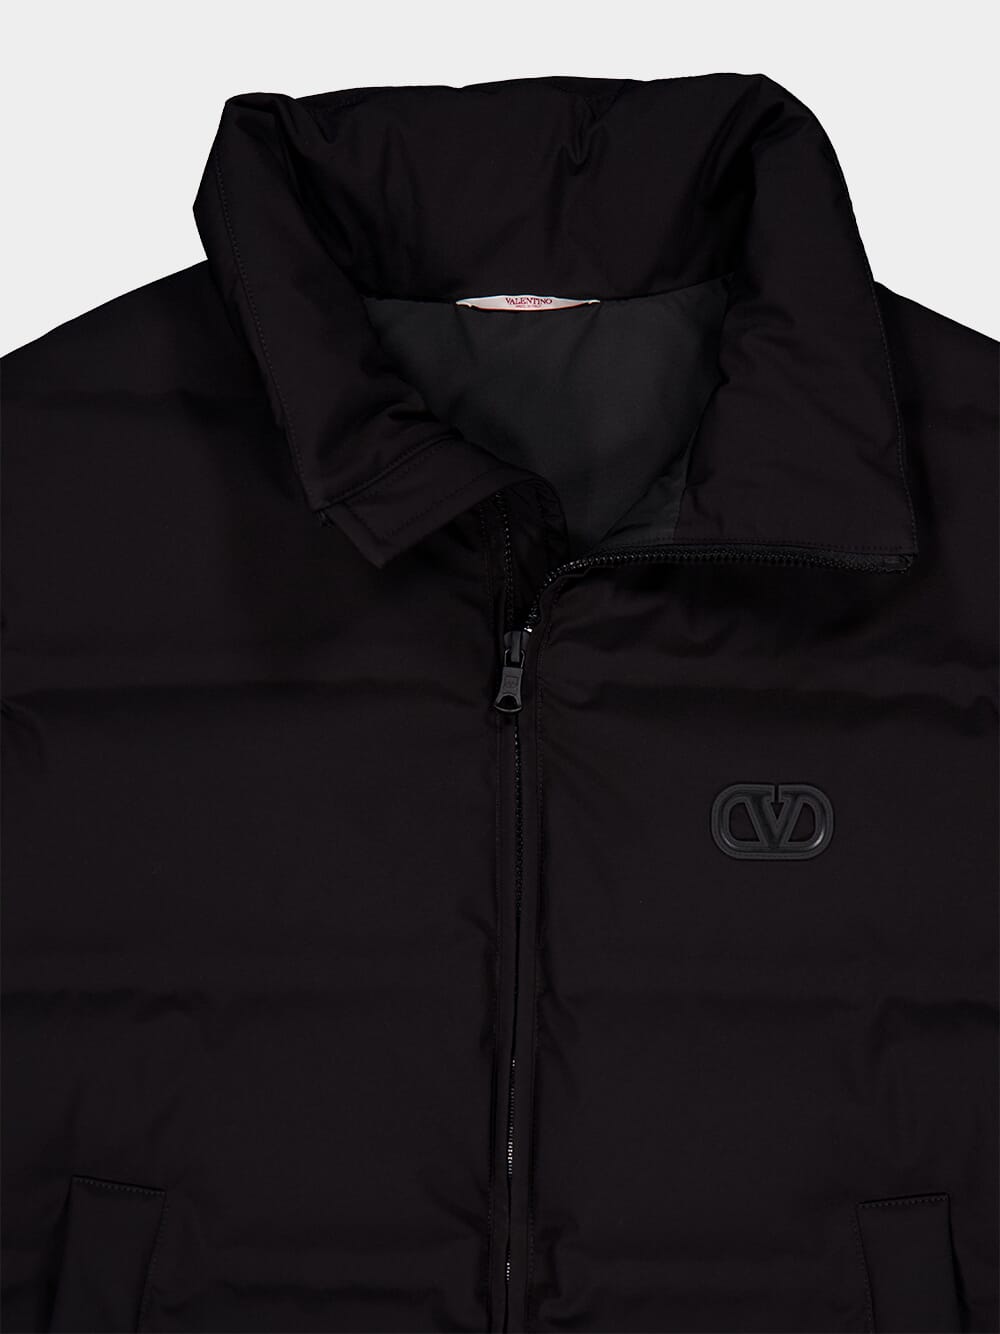 Valentino GaravaniVLogo Nylon Hooded Black Waistcoat at Fashion Clinic